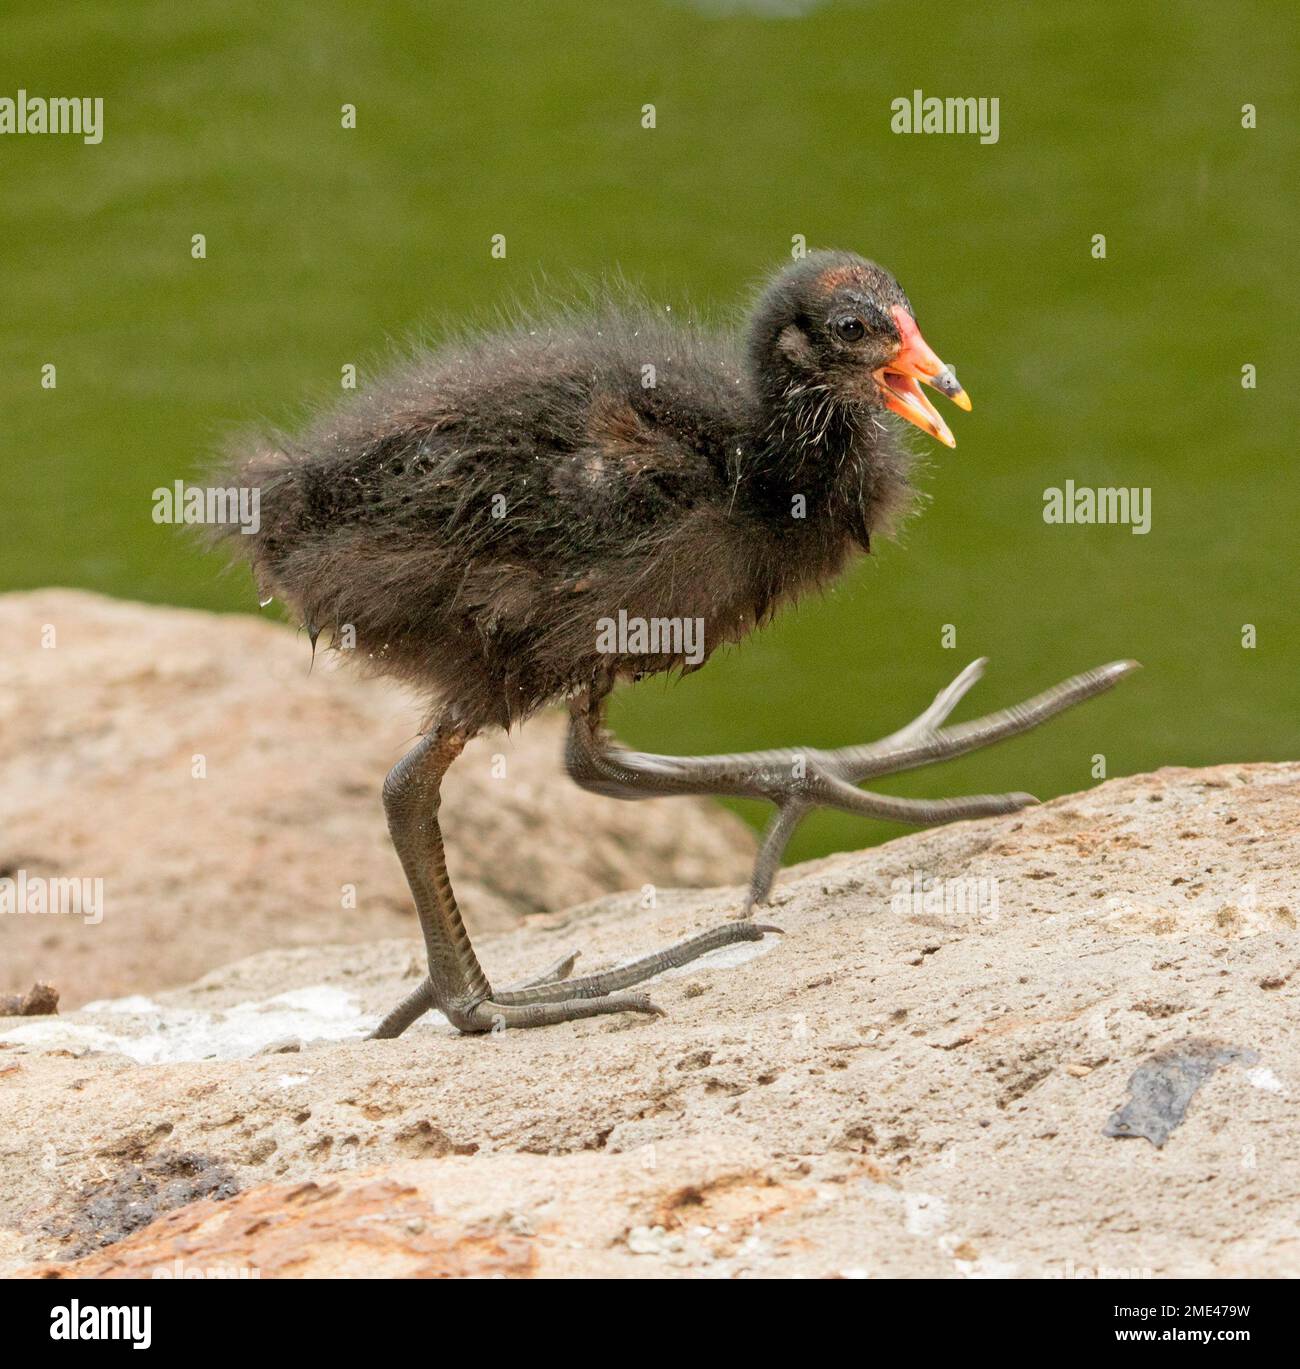 Dusky moorhen chick . Gallinula tenebrosa, on a rock beside water in urban parkland in Australia Stock Photo